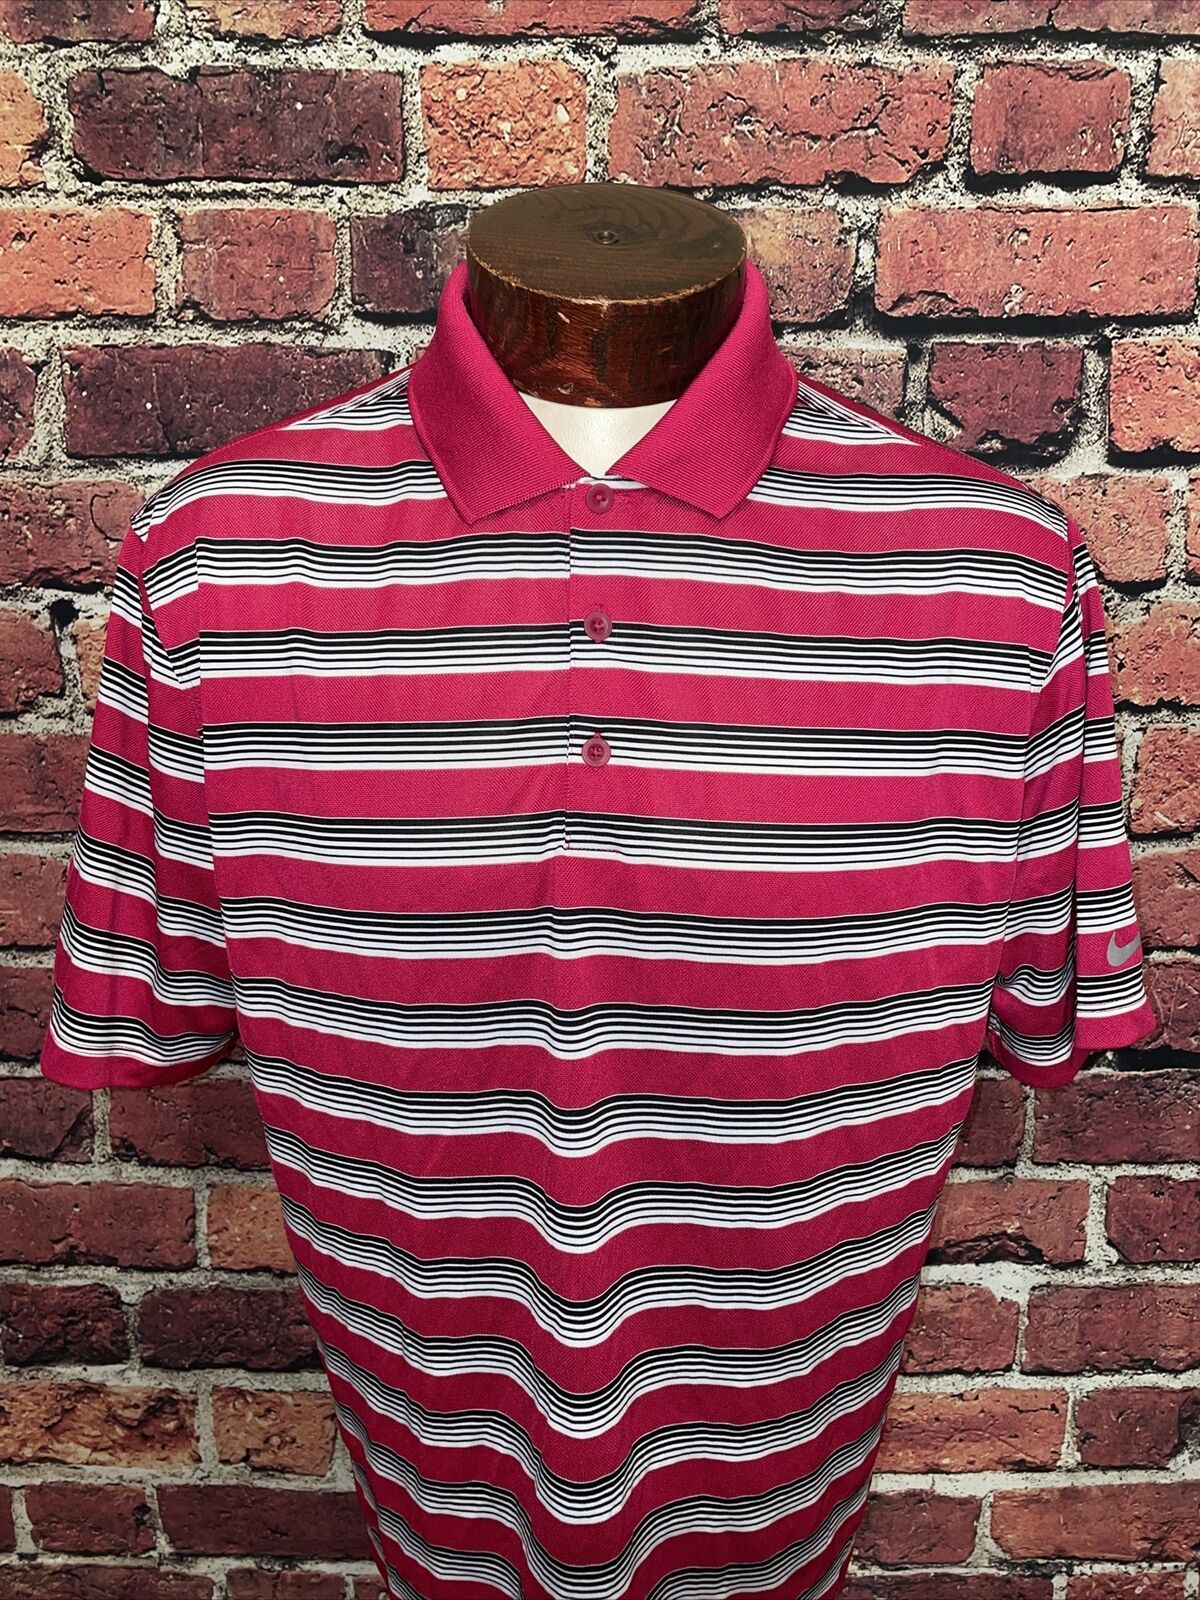 Nike Golf Mens Large Pink White Black Striped Short Sleeve Golf Polo Shirt 